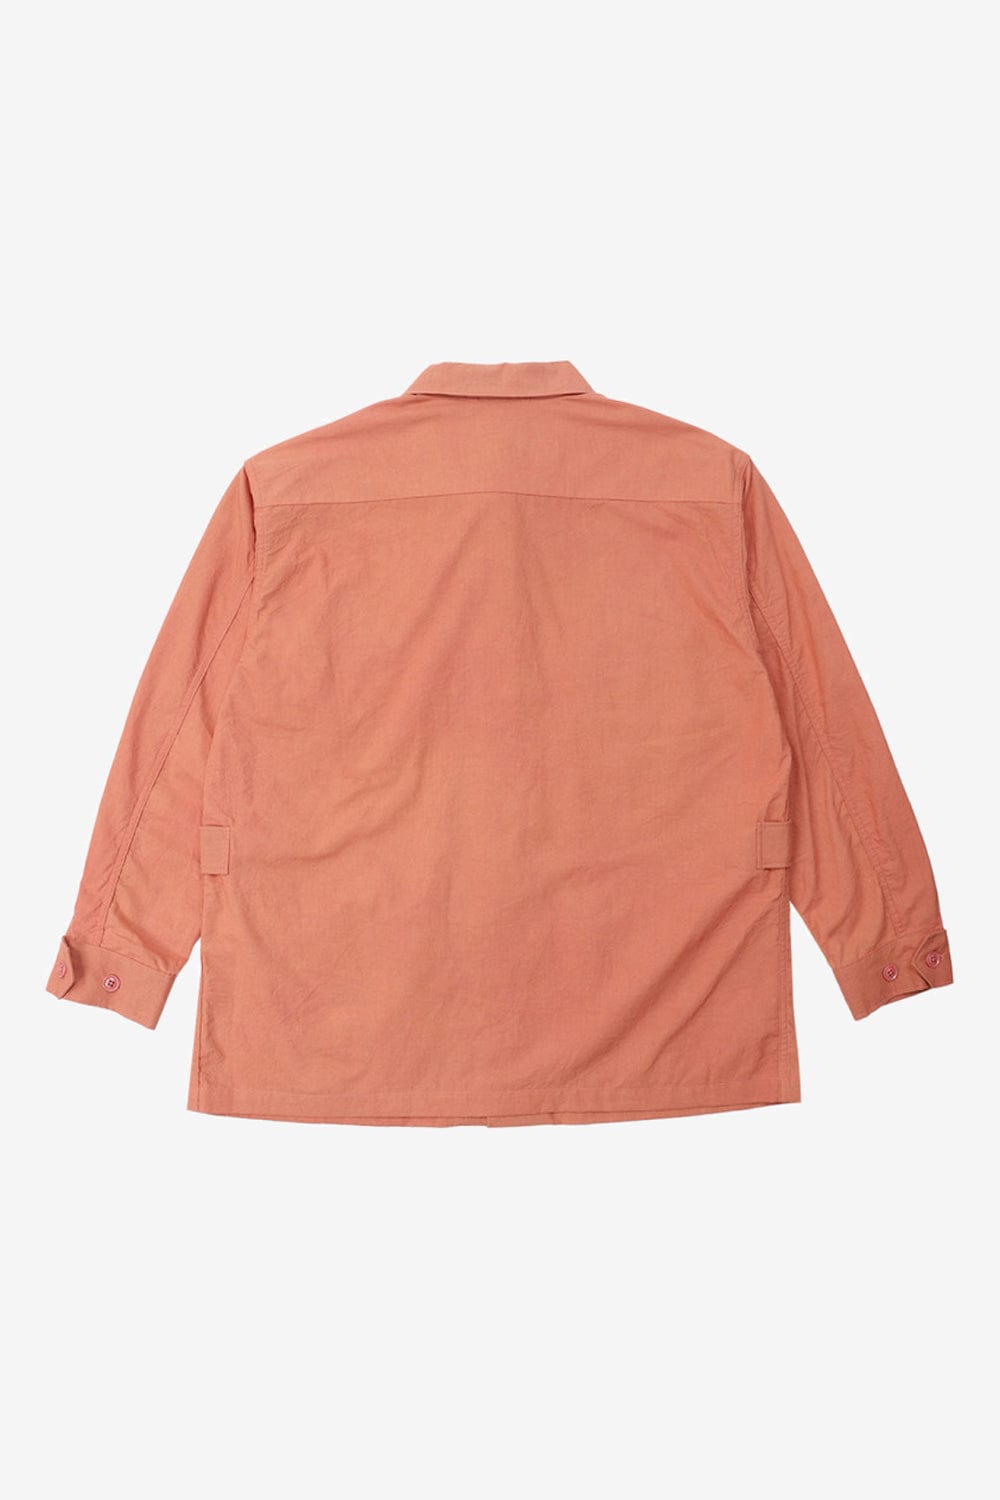 Engineered Garments Jungle Fatigue Jacket (Rust Cotton Sheeting